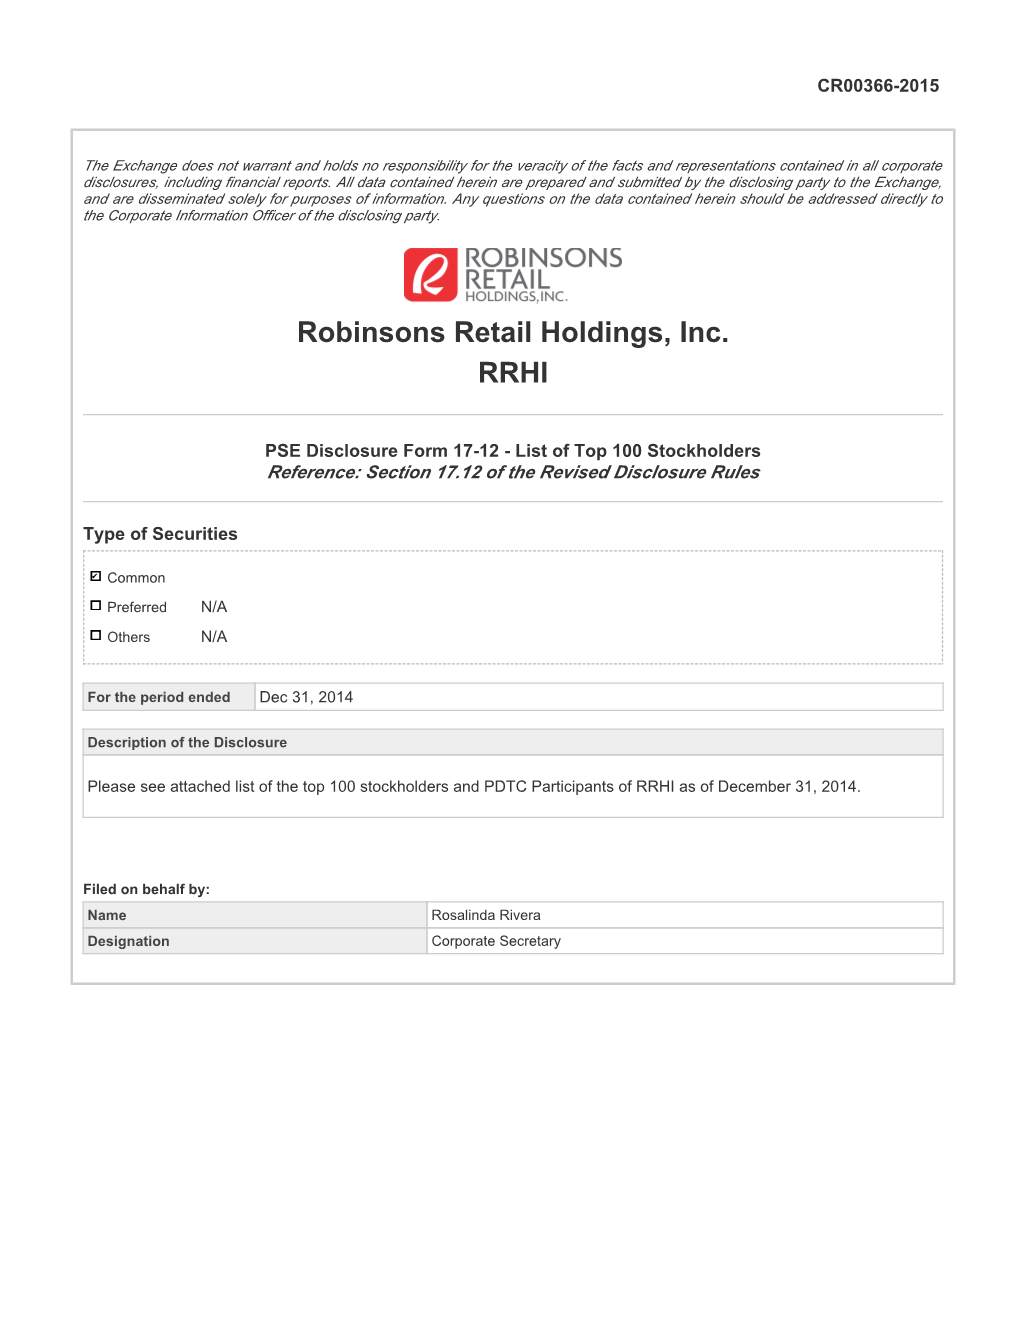 Robinsons Retail Holdings, Inc. RRHI